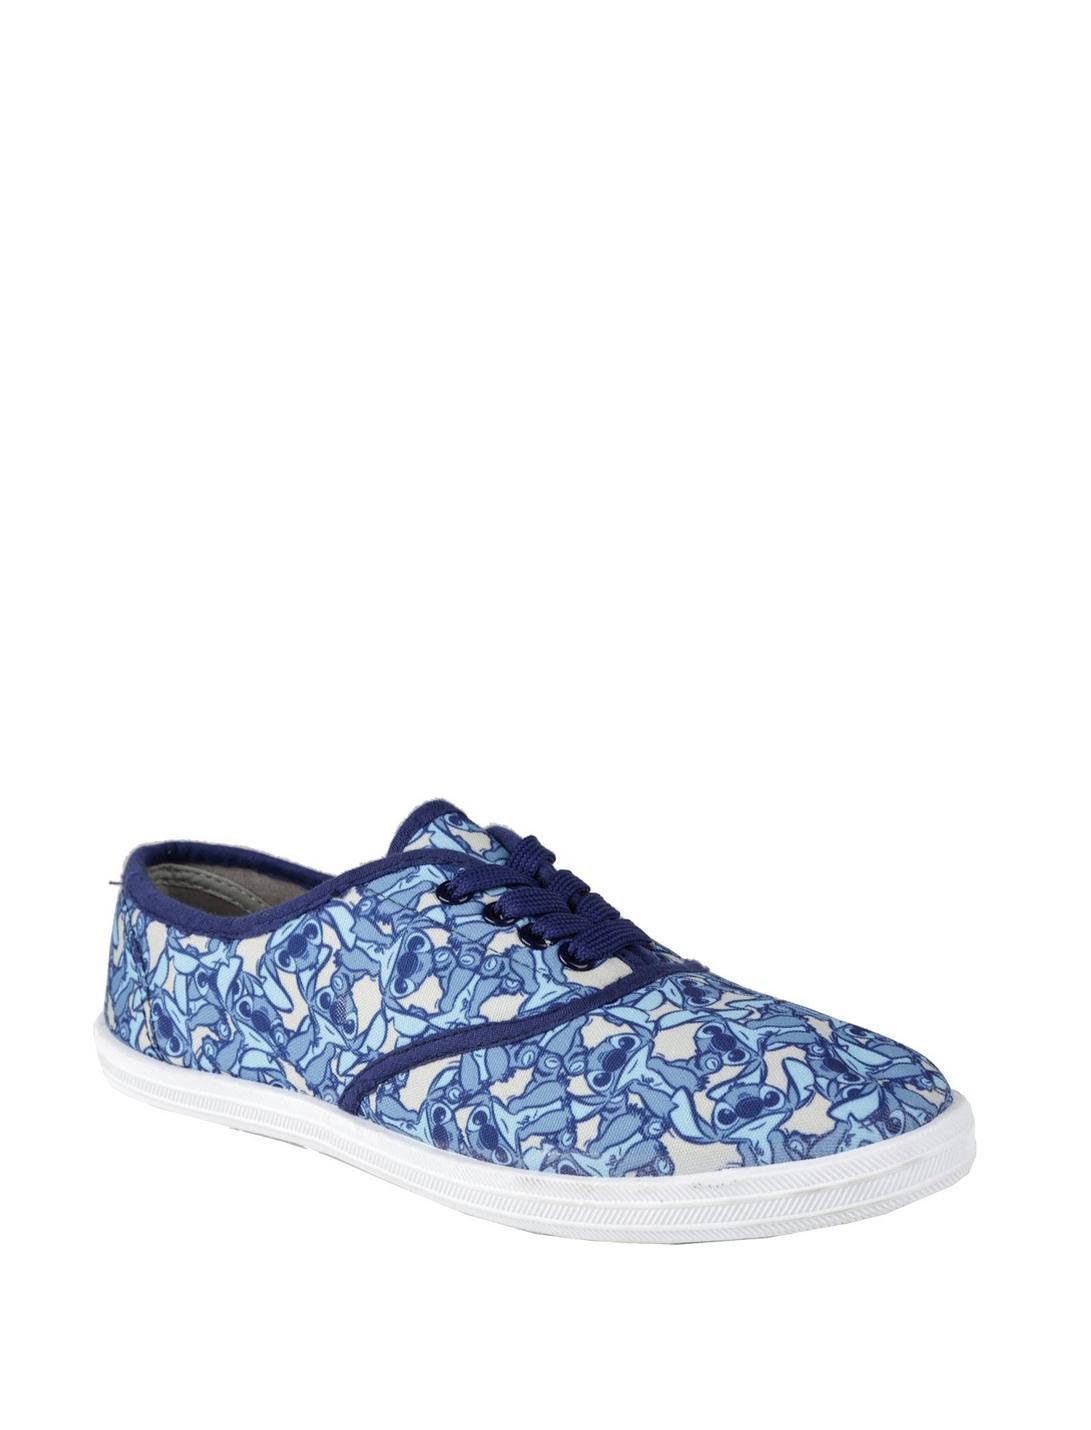 Disney Lilo & Stitch Lace-Up Sneakers, BLUE, hi-res